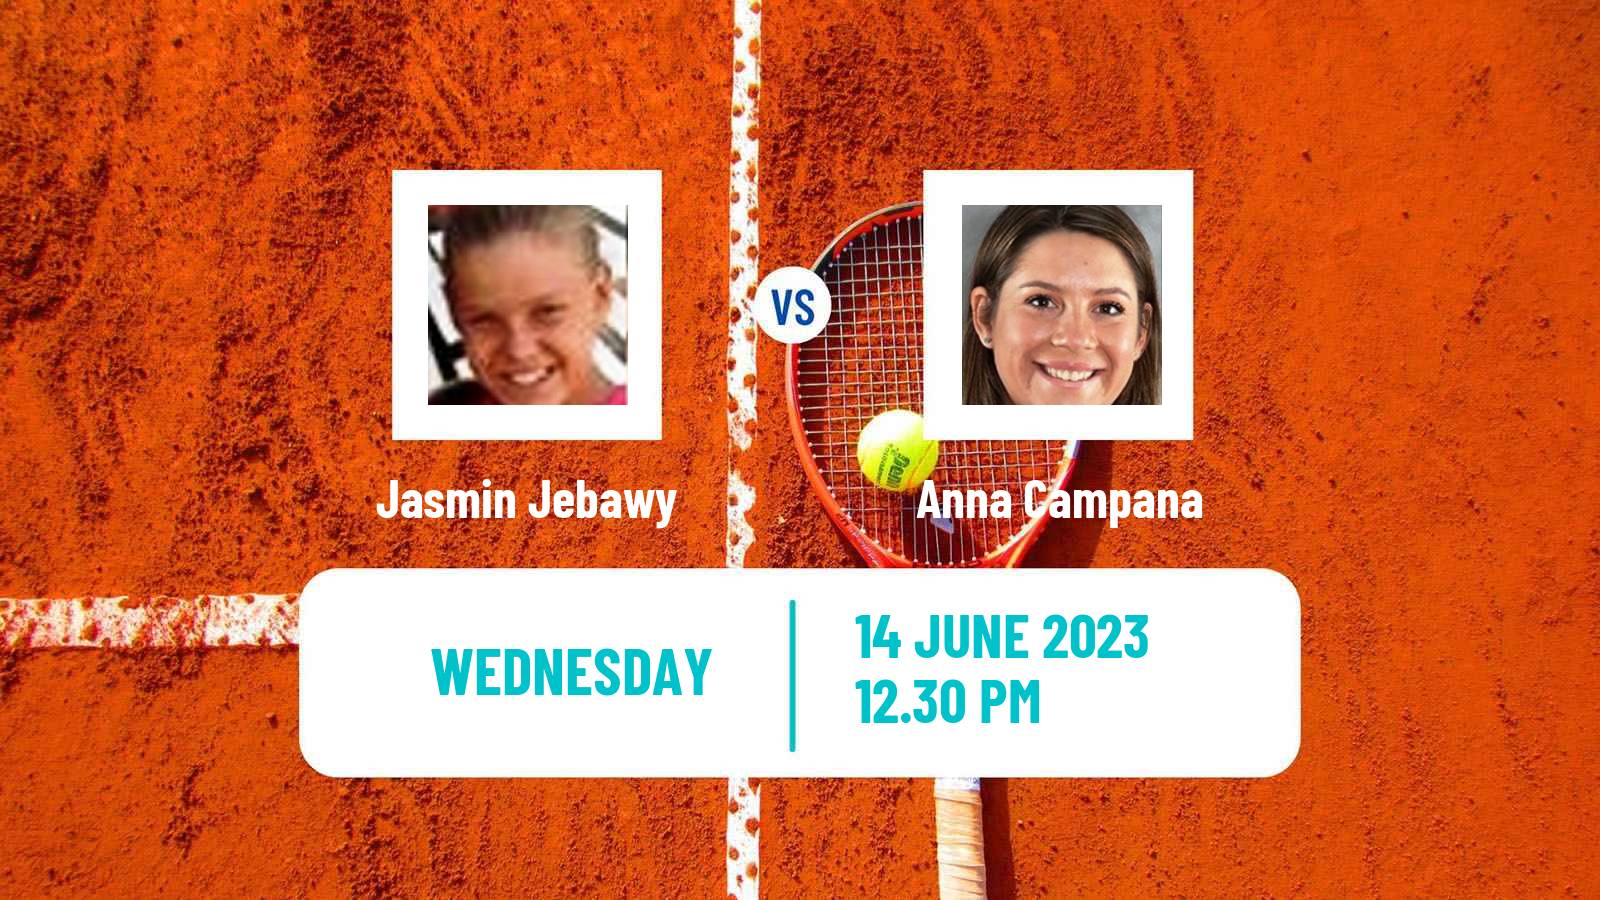 Tennis ITF W25 Colorado Springs Women Jasmin Jebawy - Anna Campana